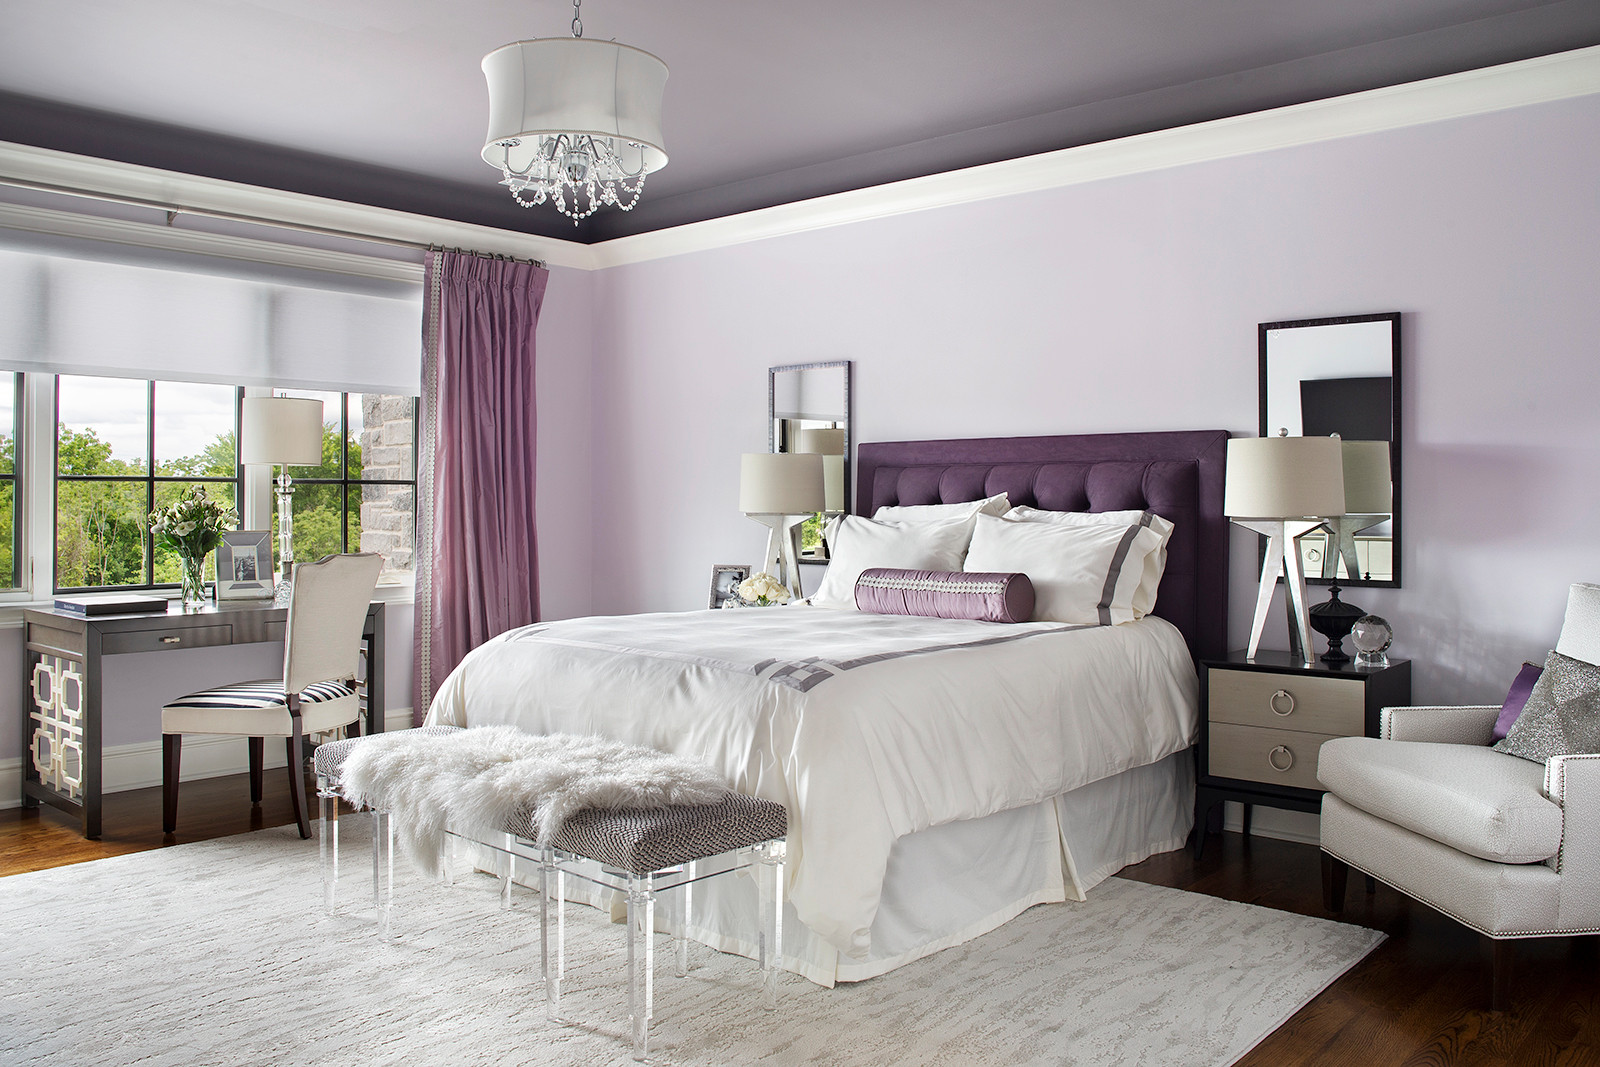 75 Beautiful Dark Wood Floor Bedroom With Purple Walls Pictures Ideas January 2021 Houzz